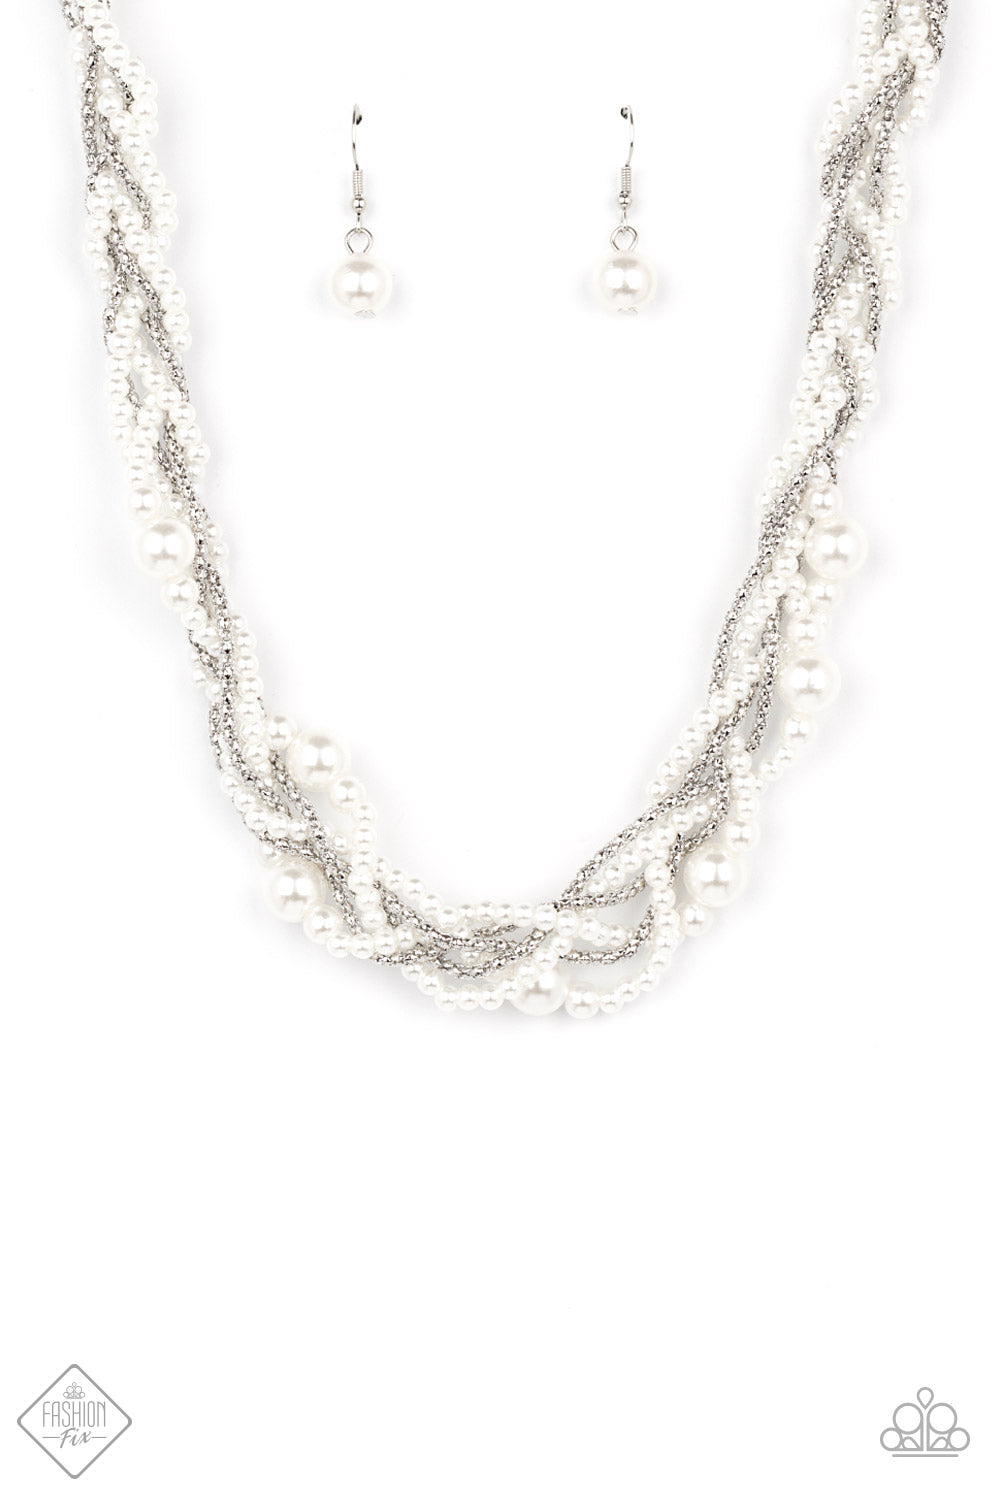 Royal Reminiscence - White (Pearl) Necklace (FFA-0321) freeshipping - JewLz4u Gemstone Gallery